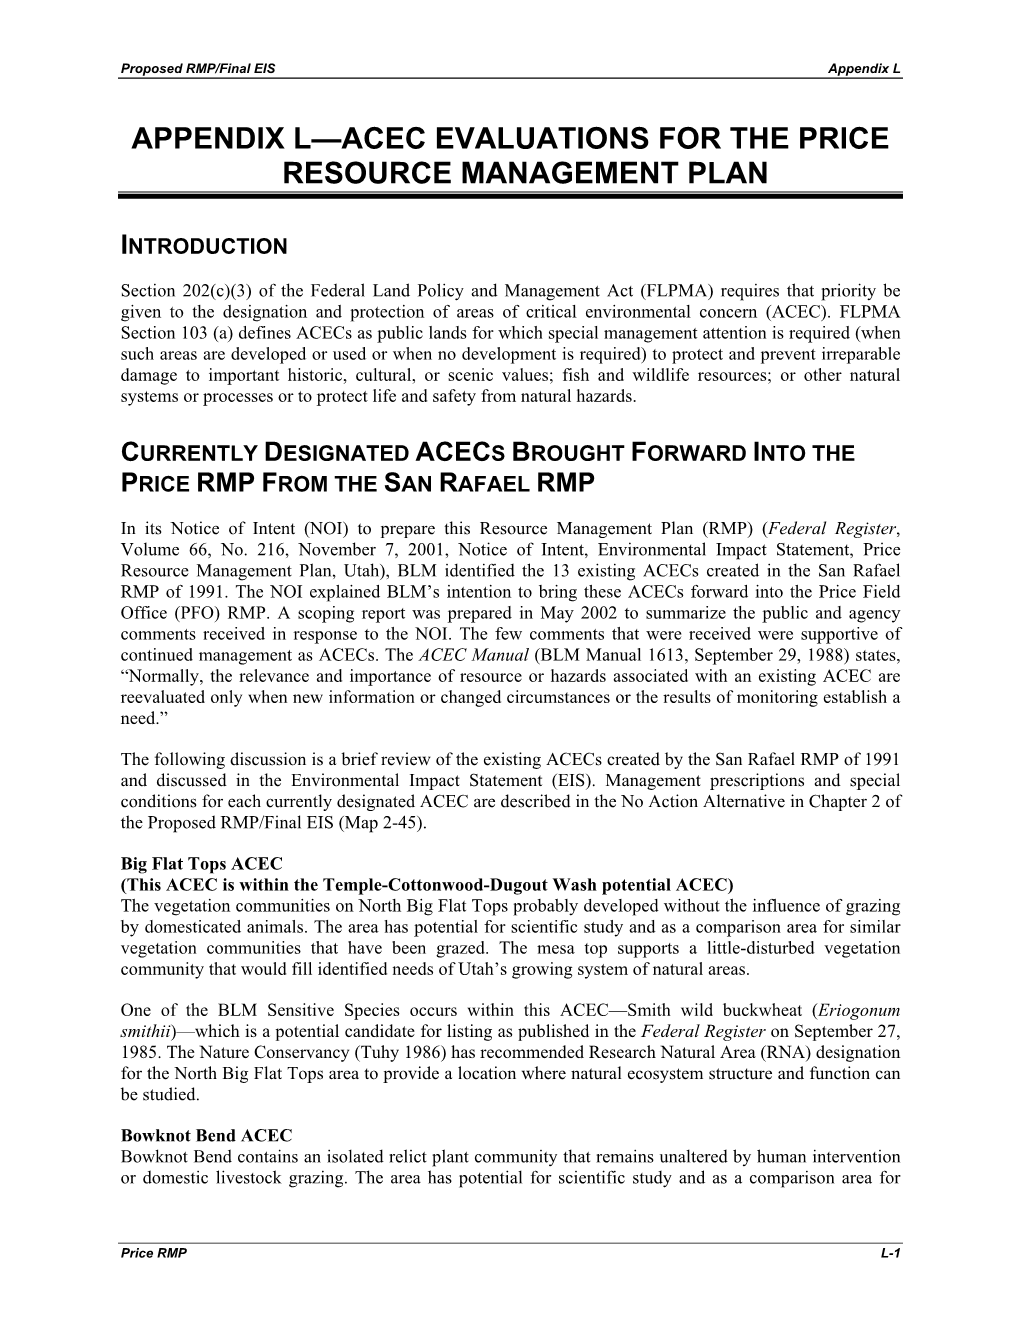 Appendix L—Acec Evaluations for the Price Resource Management Plan